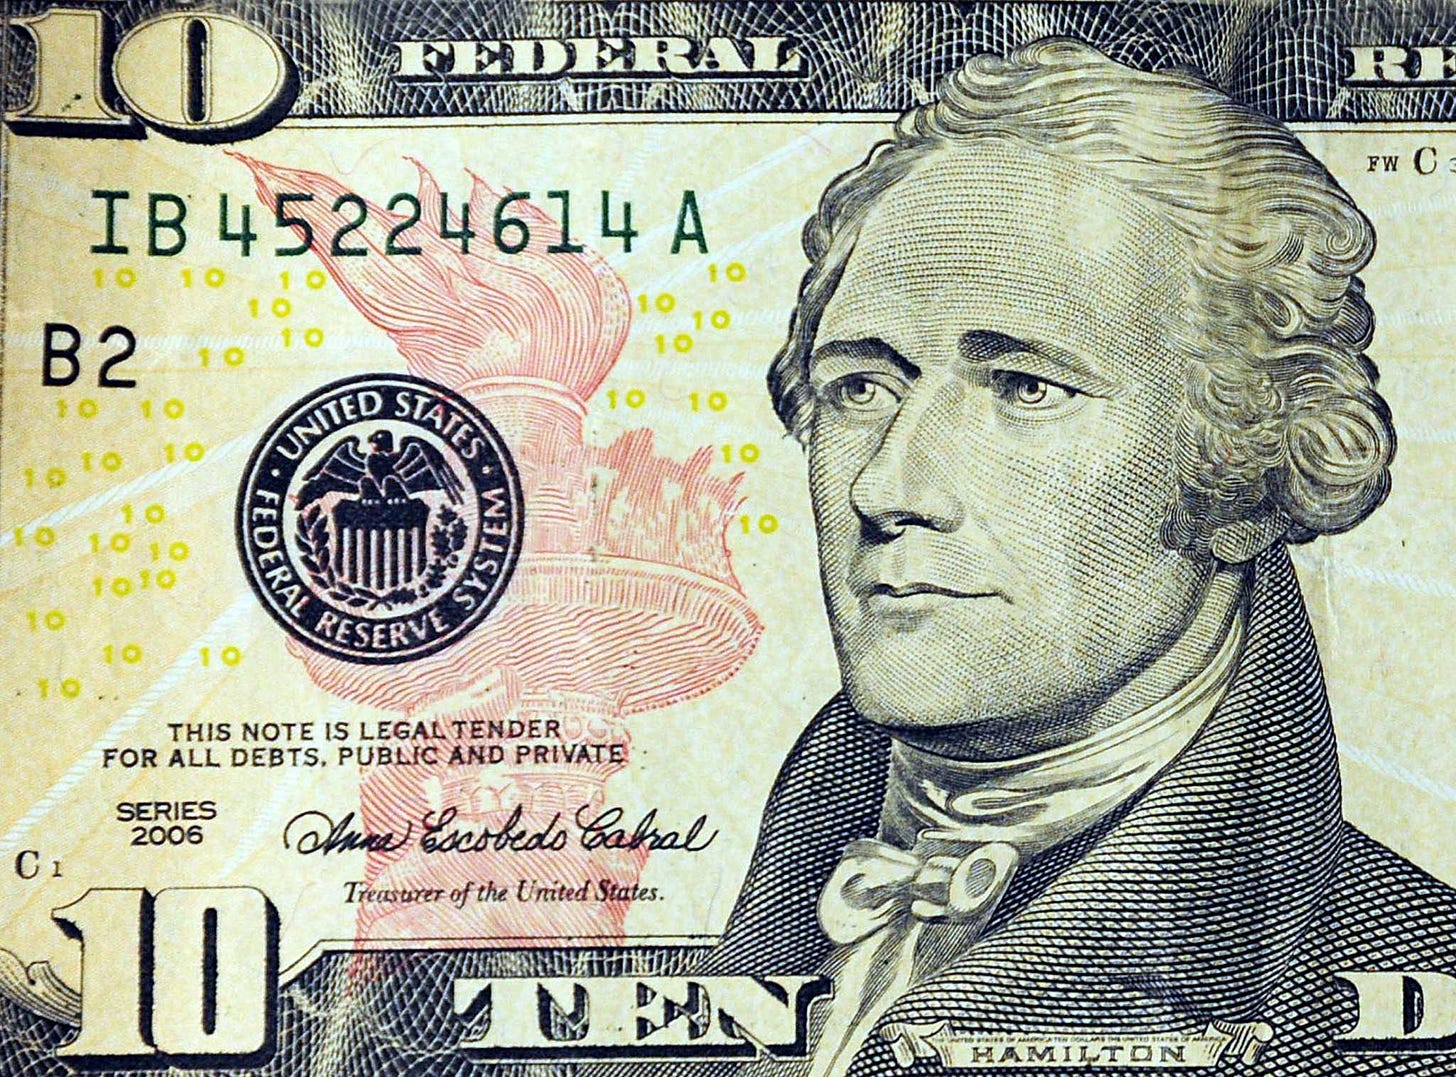 11 facts about Alexander Hamilton